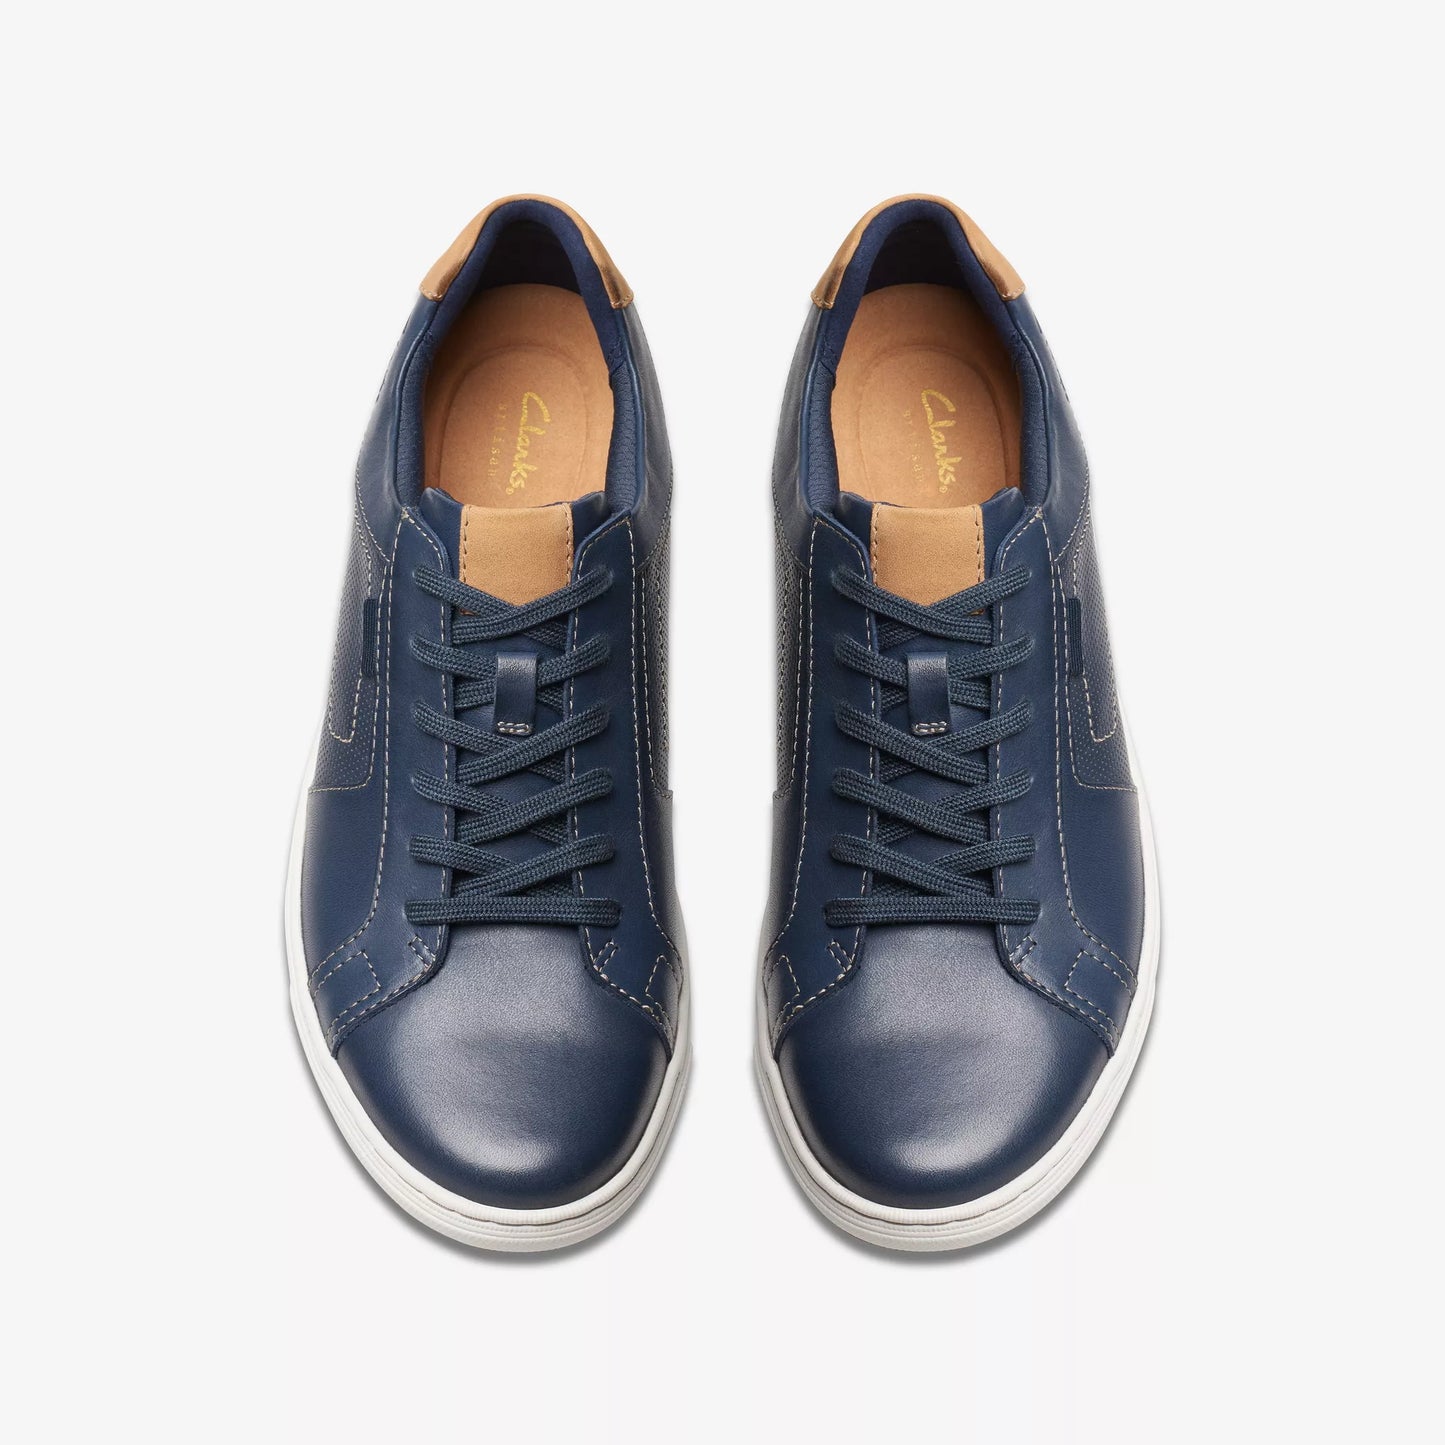 CLARKS | पुरुषों के लिए आकस्मिक जूते | MAPSTONE LACE NAVY LEATHER | नीला